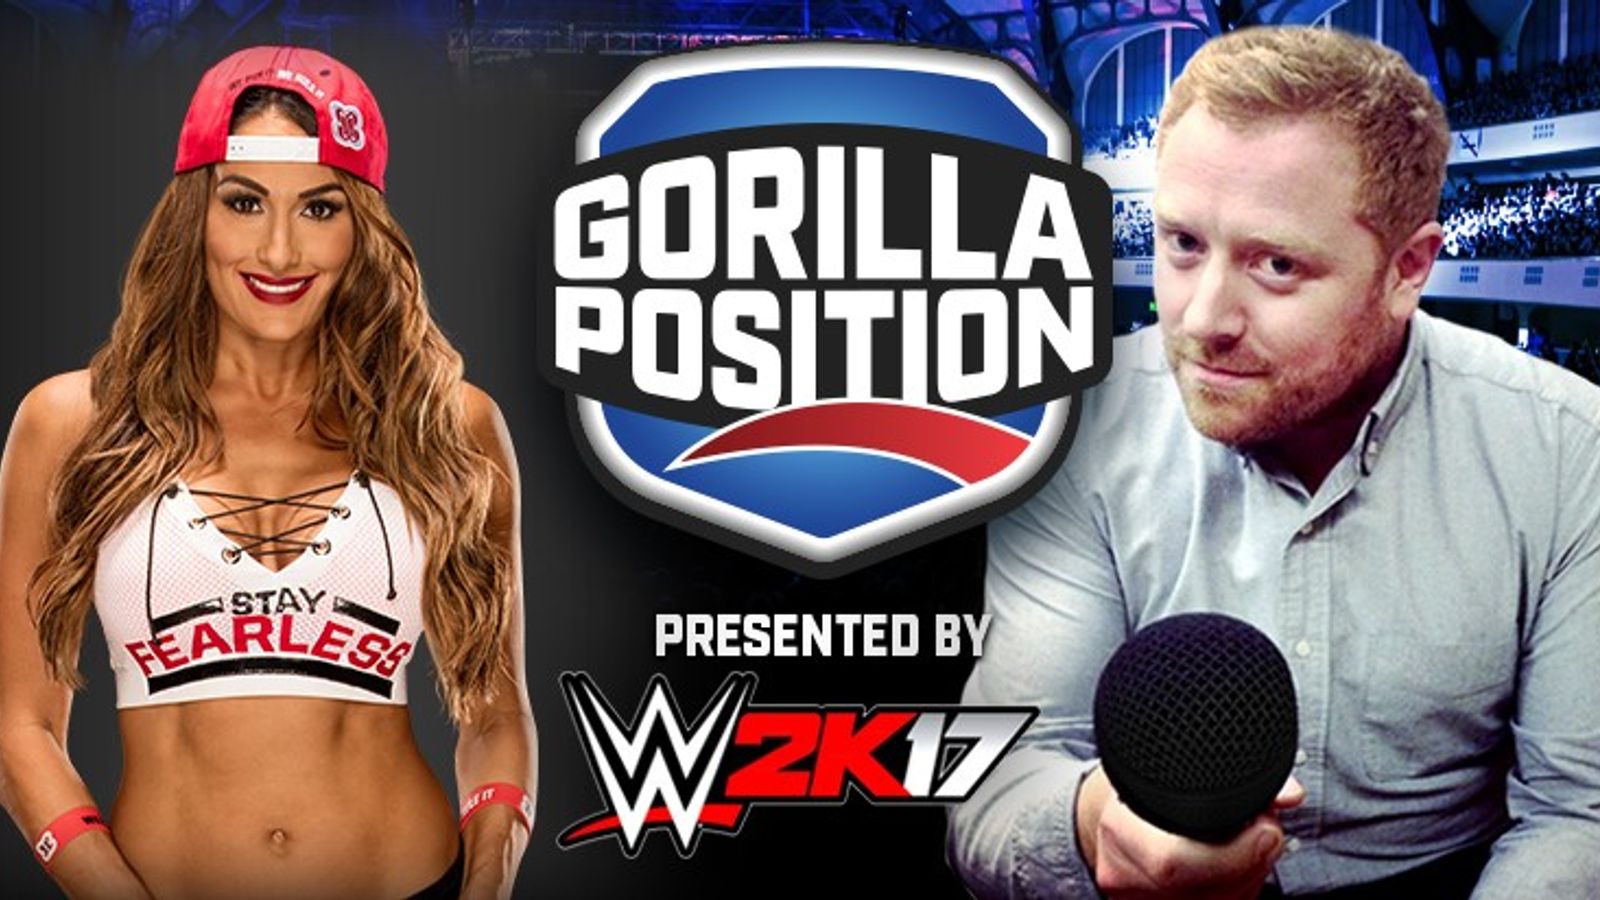 Wwe Gorilla Position Interviews With Nikki Bella And Kurt Angle Wwe